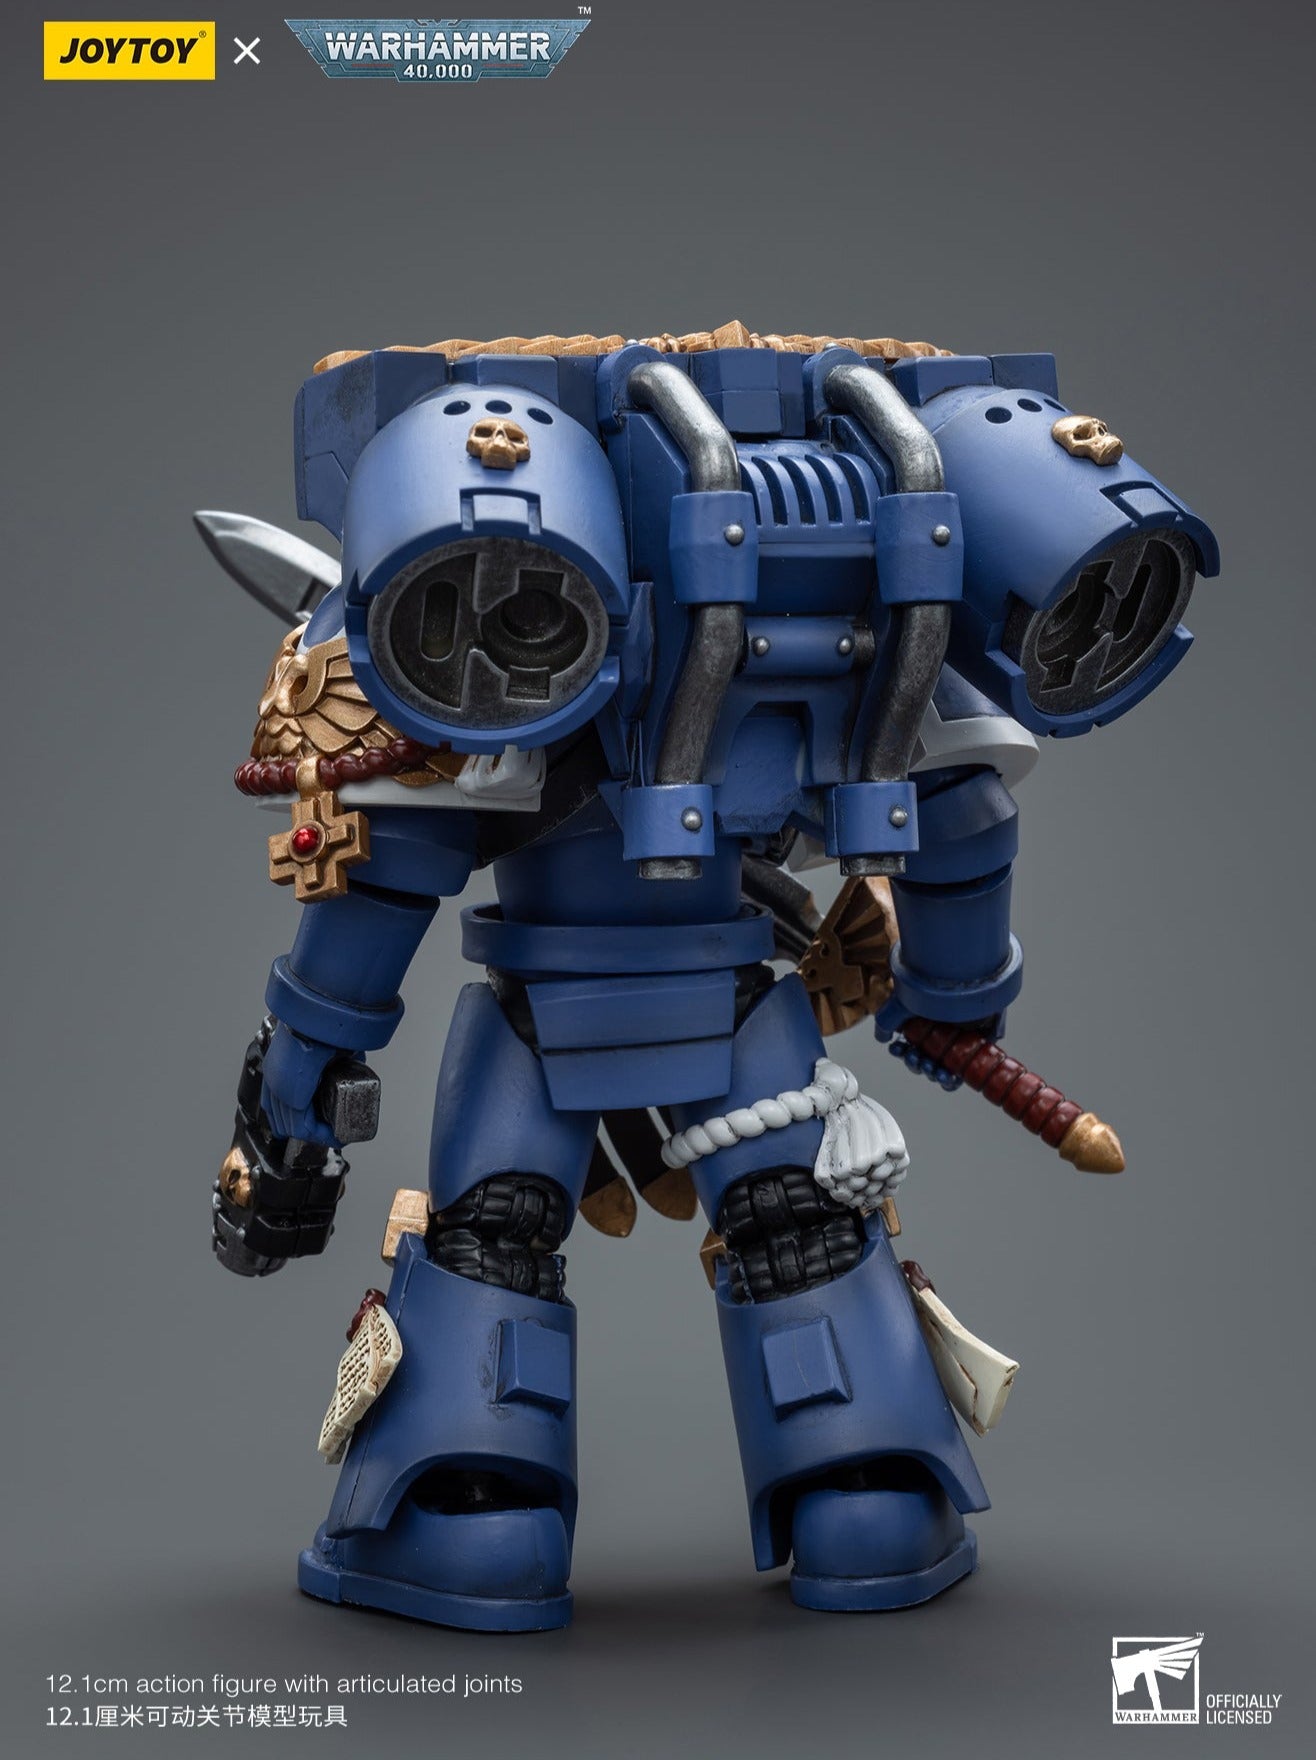 Warhammer 40k: Ultramarines: Vanguard Veteran Sergeant: Joy Toy